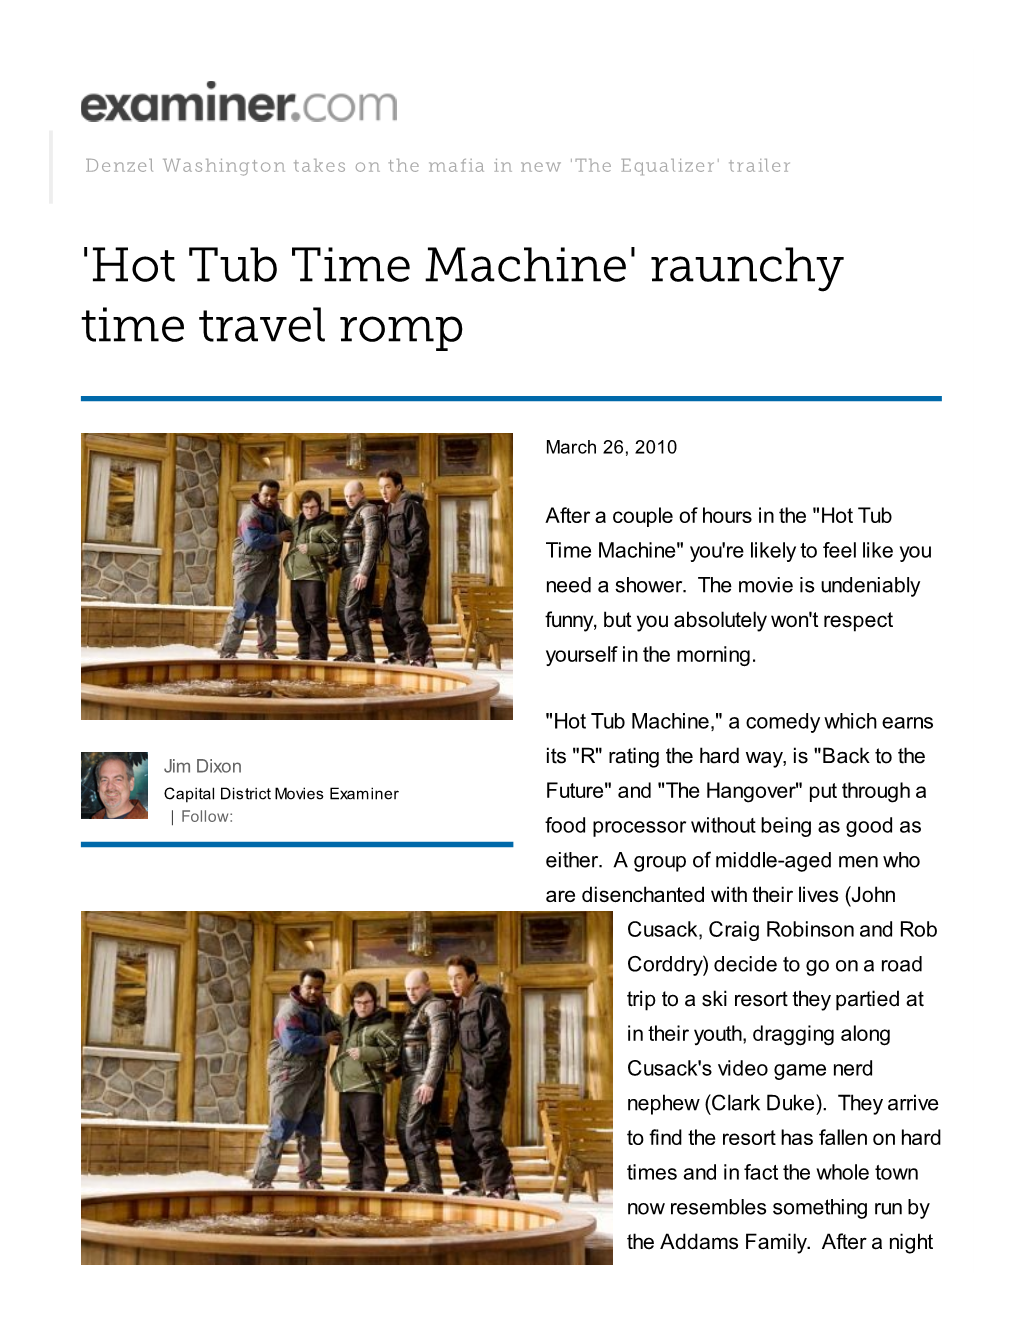 Hot Tub Time Machine' Raunchy Time Travel Romp